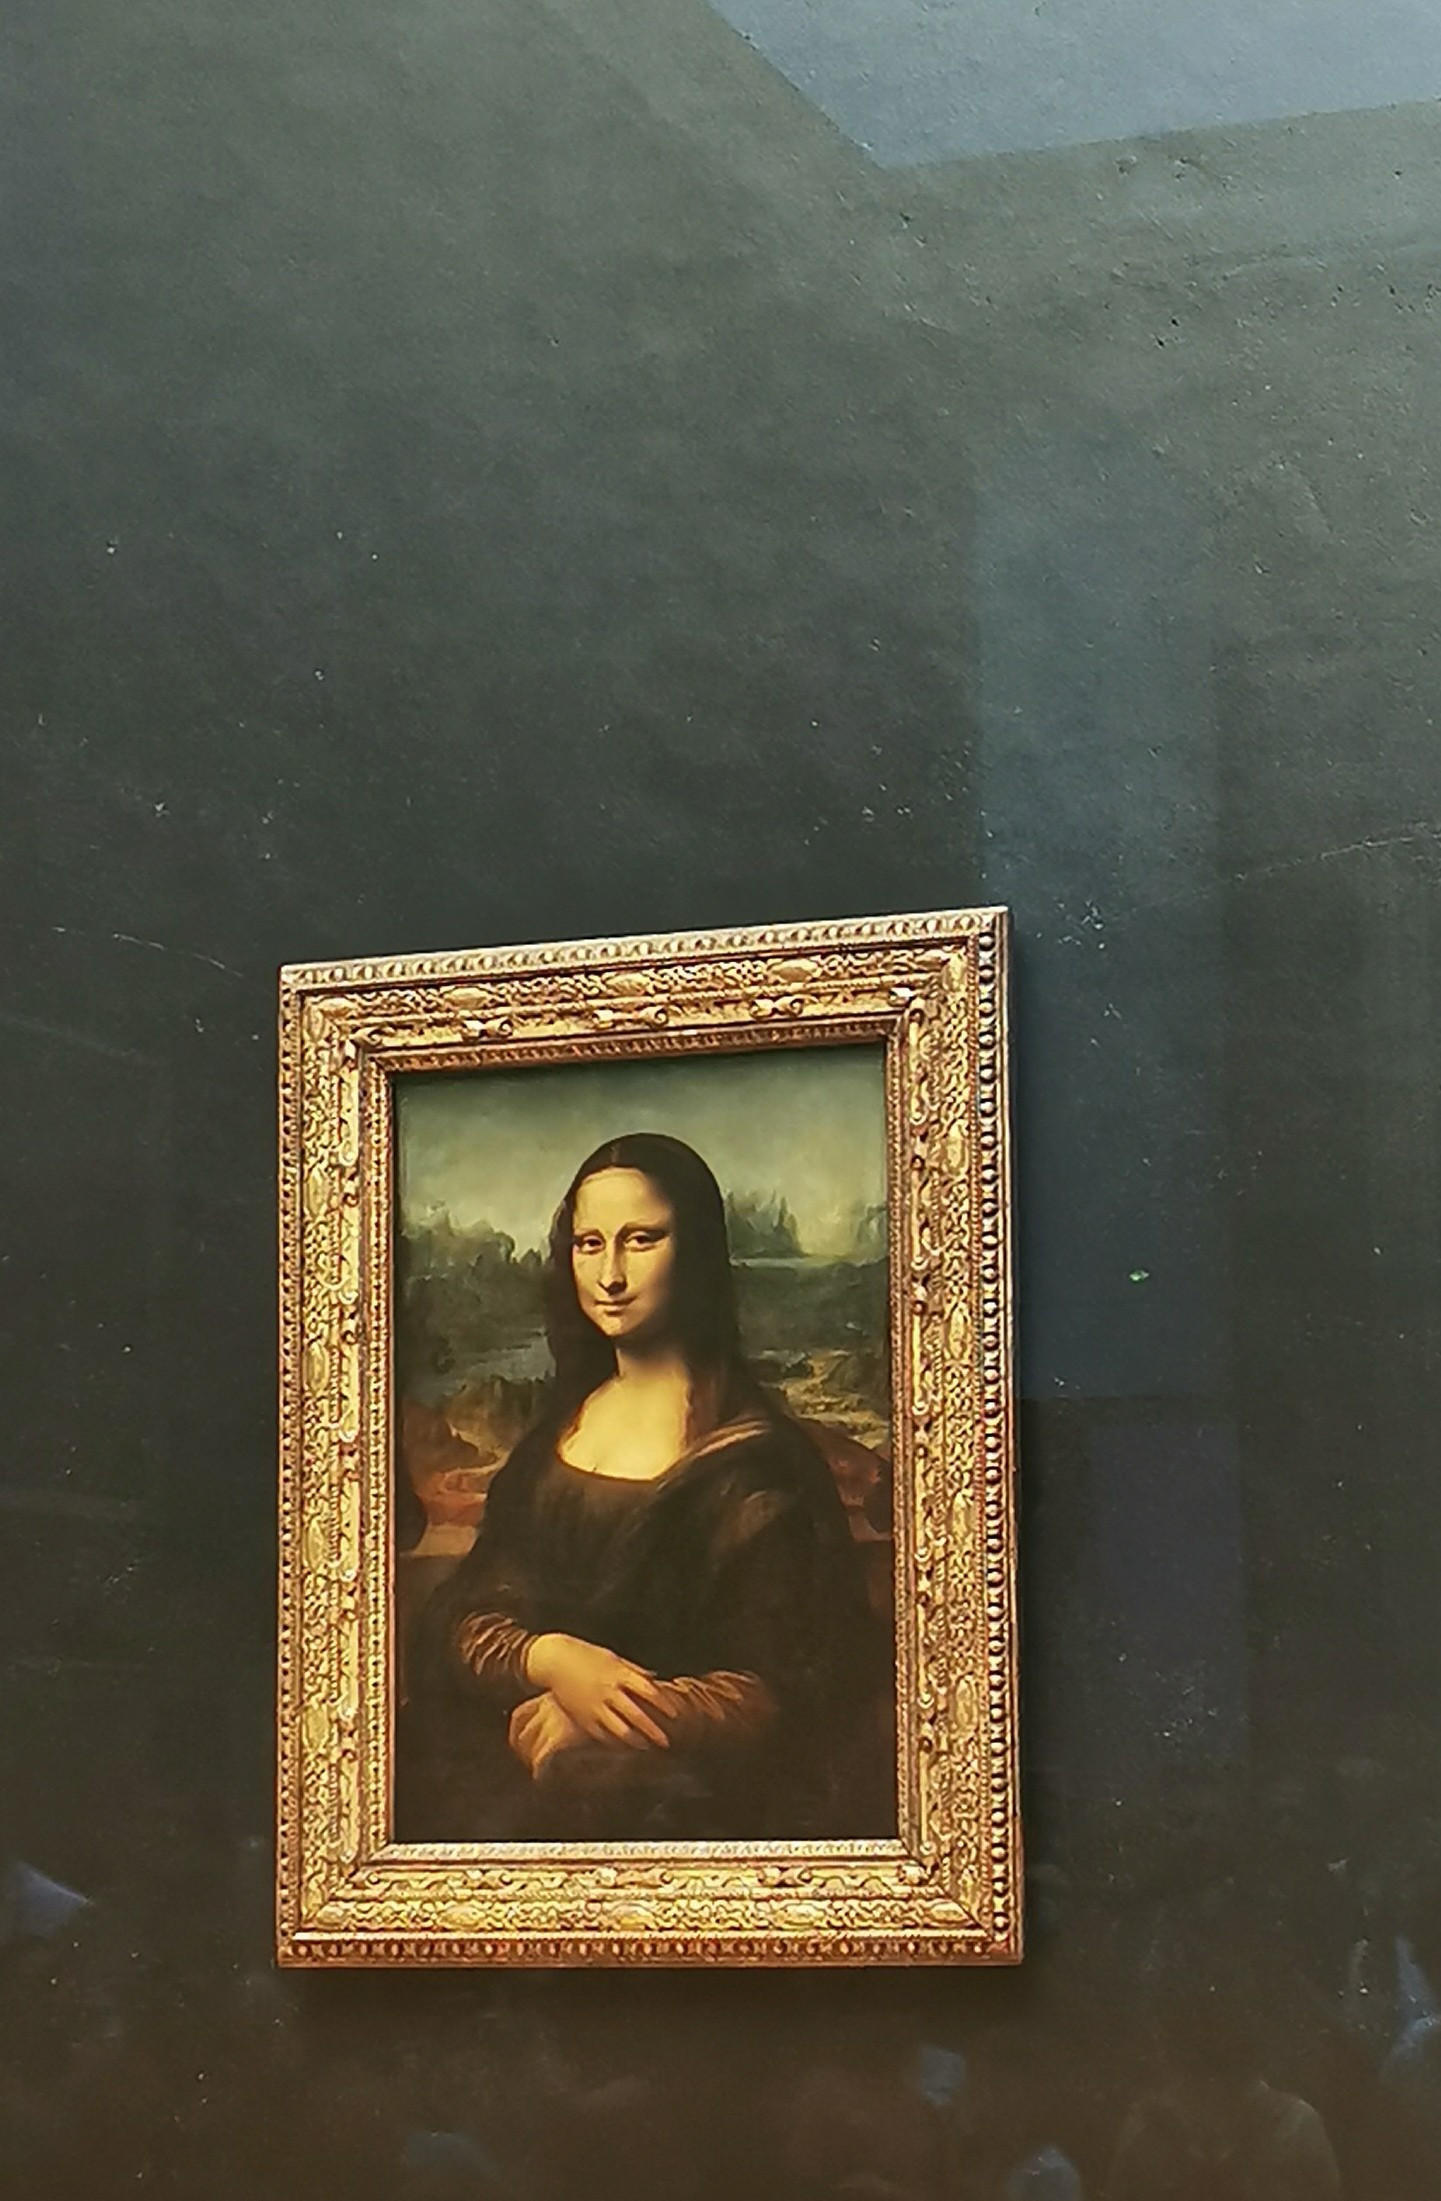 Louvre<br/>
Mona Lisa 